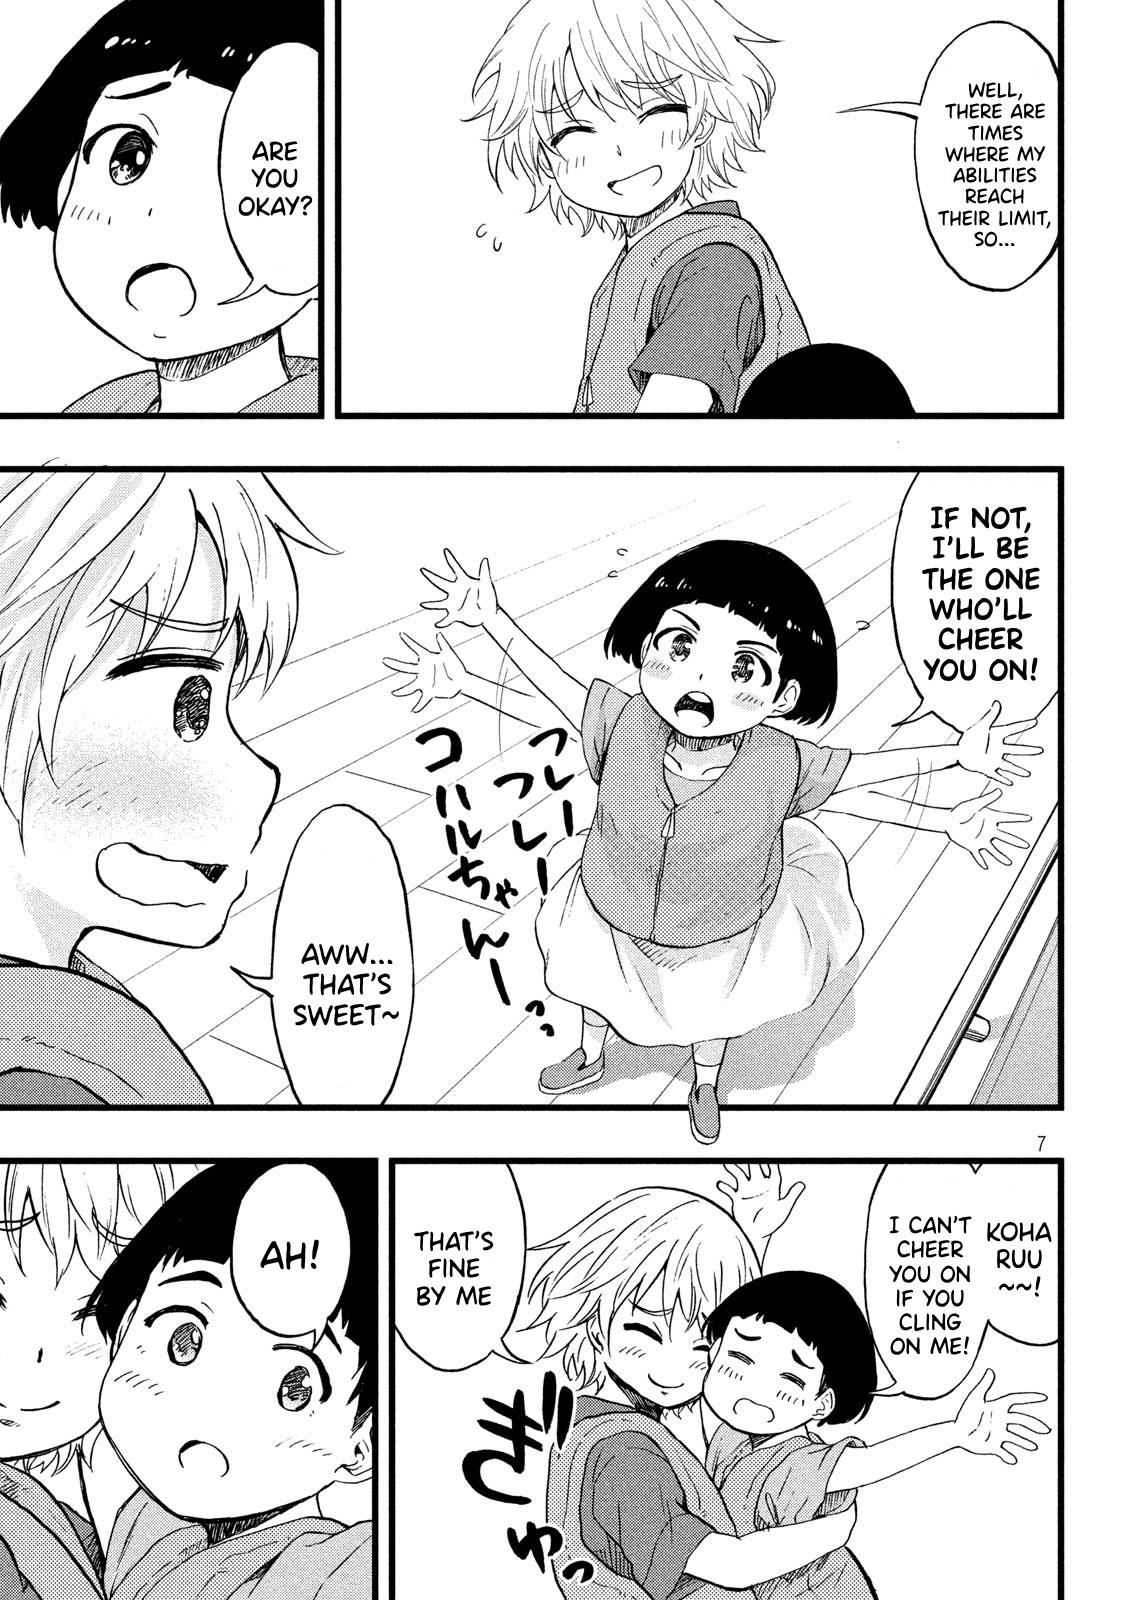 Koharu Haru! - Page 3